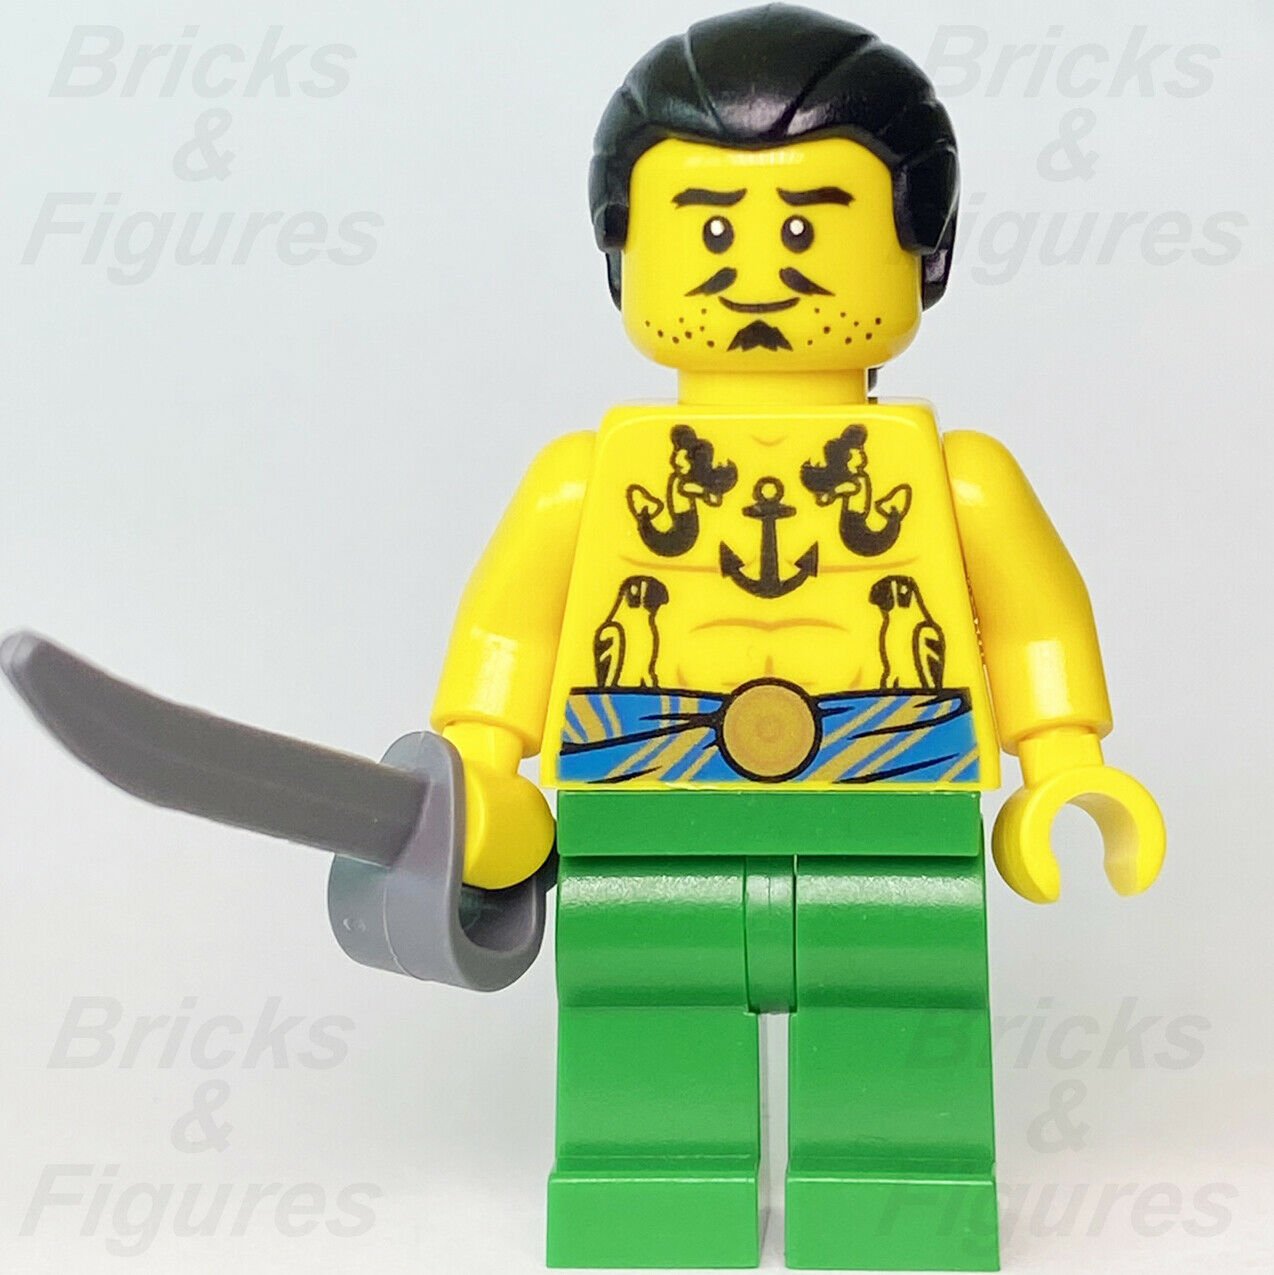 New Ideas LEGO Tattooga Pirates Minifigure with Sword from set 21322 idea072 - Bricks & Figures